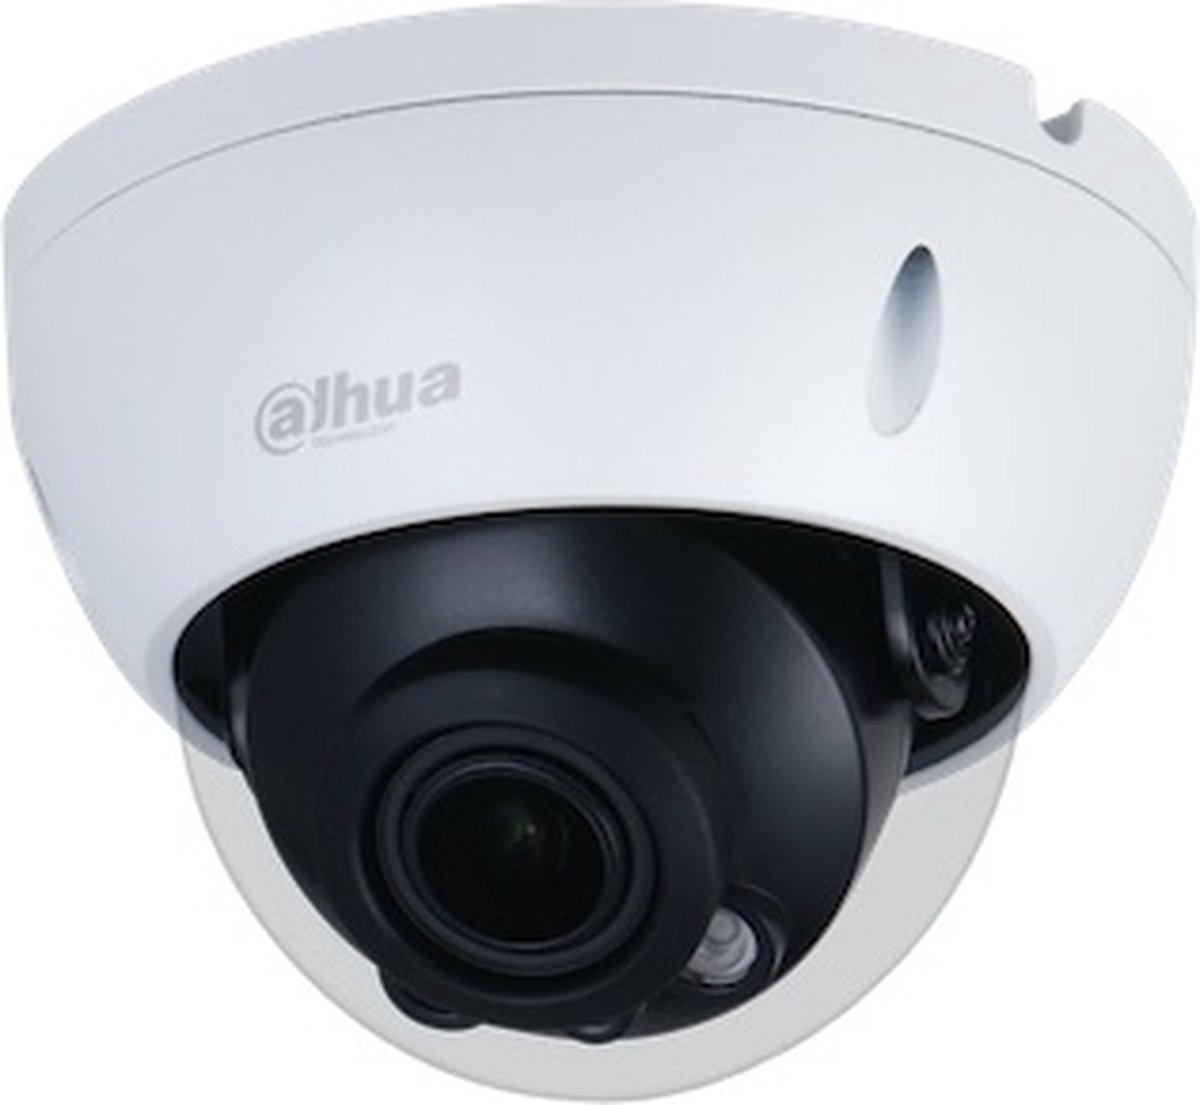 Dahua IPC-HDBW3441R-ZS Full HD 4MP Starlight Lite AI buiten dome camera met 40m IR, varifocale lens, PoE, microSD - Beveiligingscamera IP camera bewakingscamera camerabewaking veiligheidscamera beveiliging netwerk camera webcam